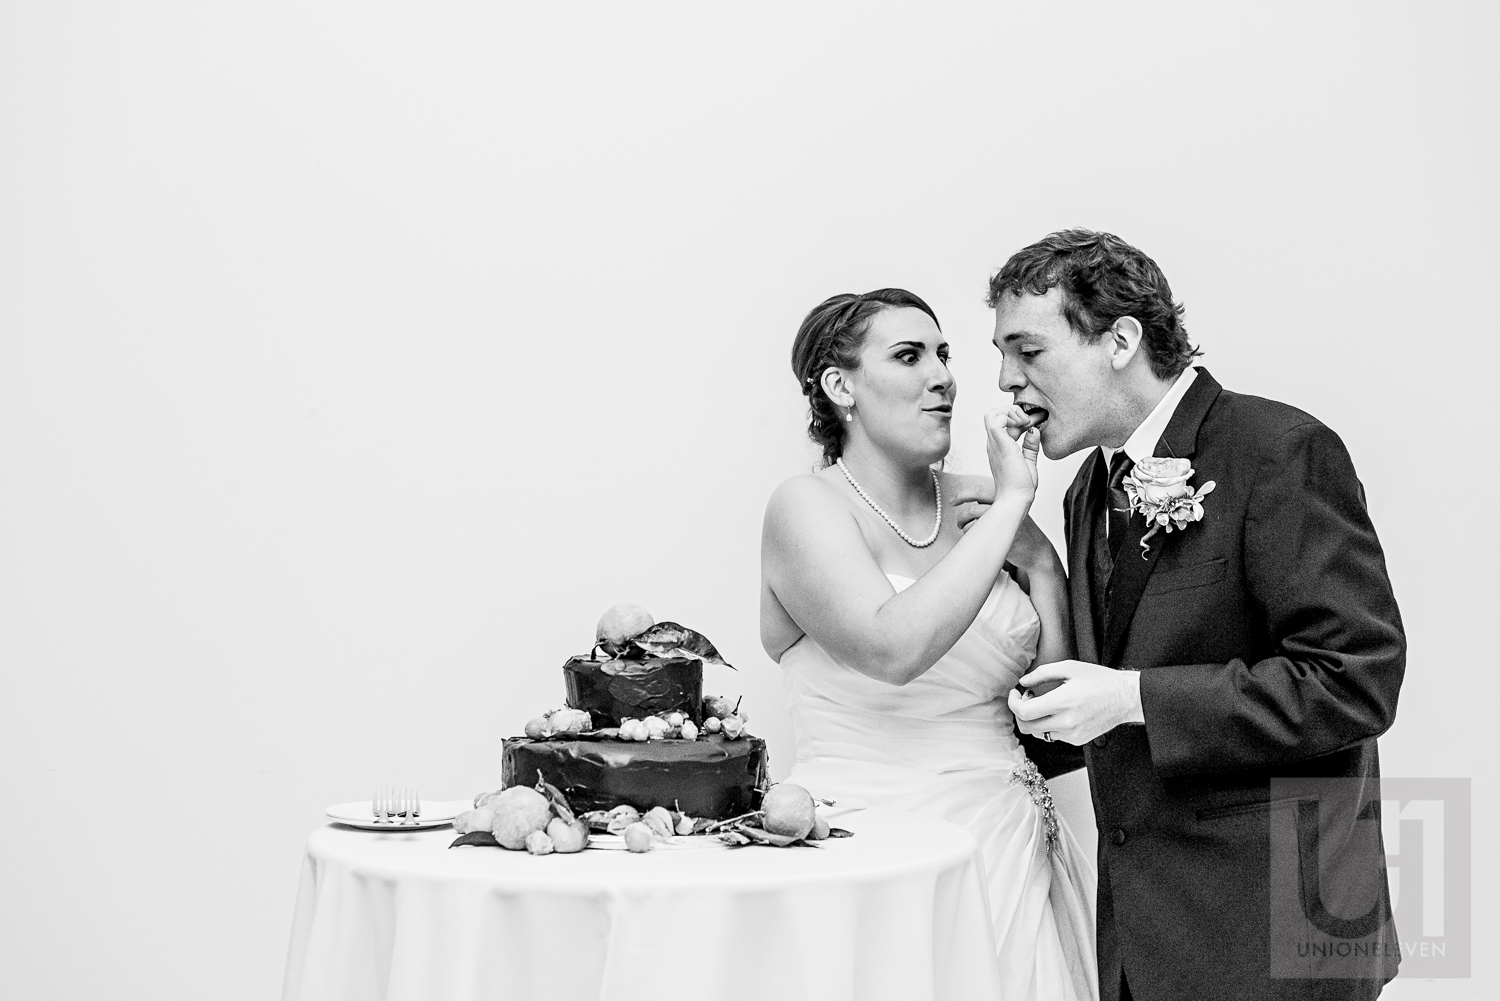 The bride feeding wedding cake to the groom during their wedding reception